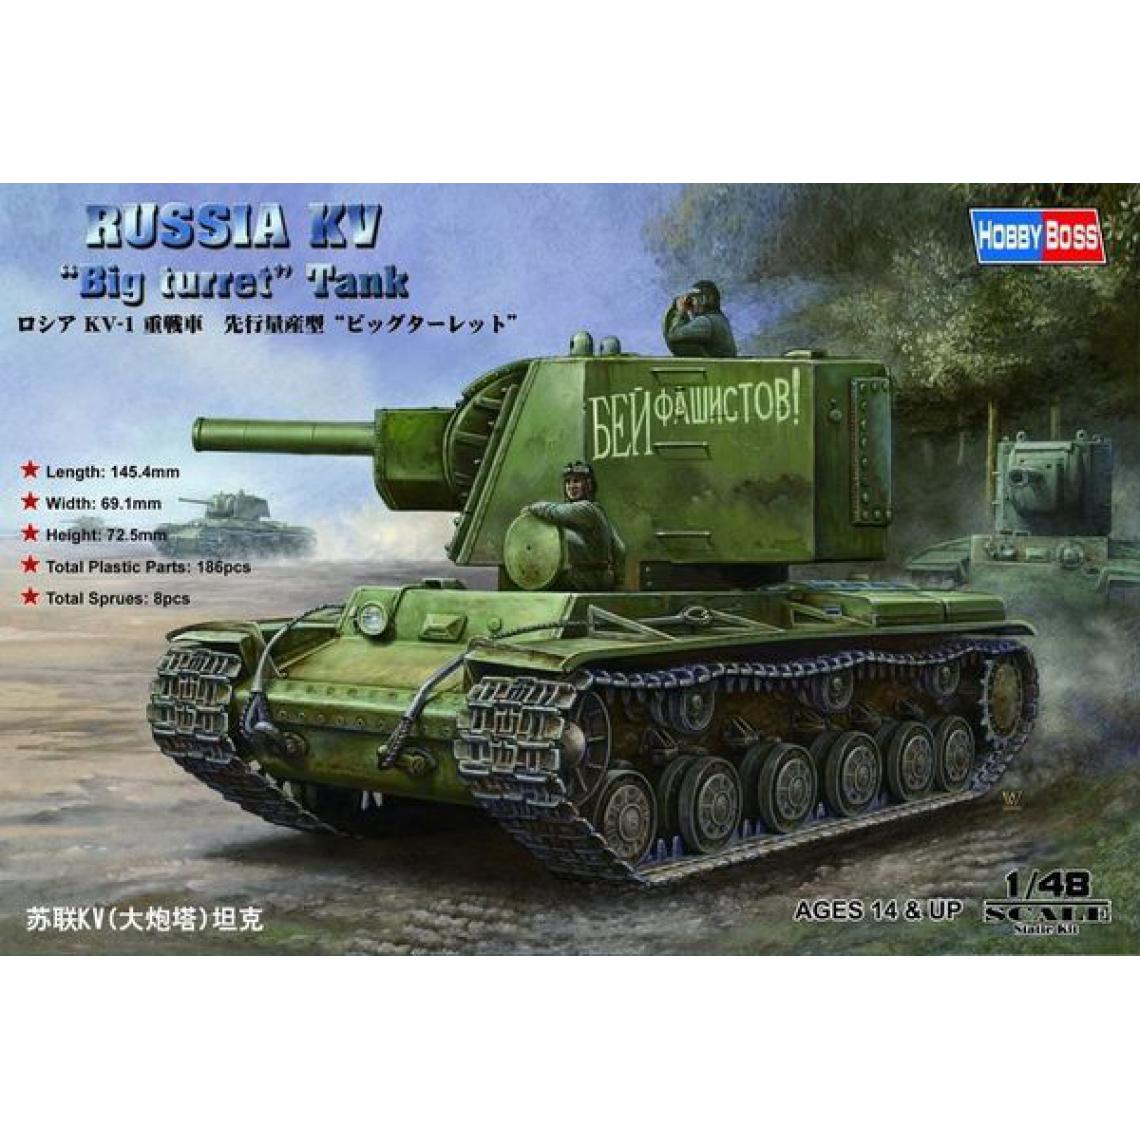 Hobby Boss - Russian KV Big Turret Tank - 1:48e - Hobby Boss - Accessoires et pièces